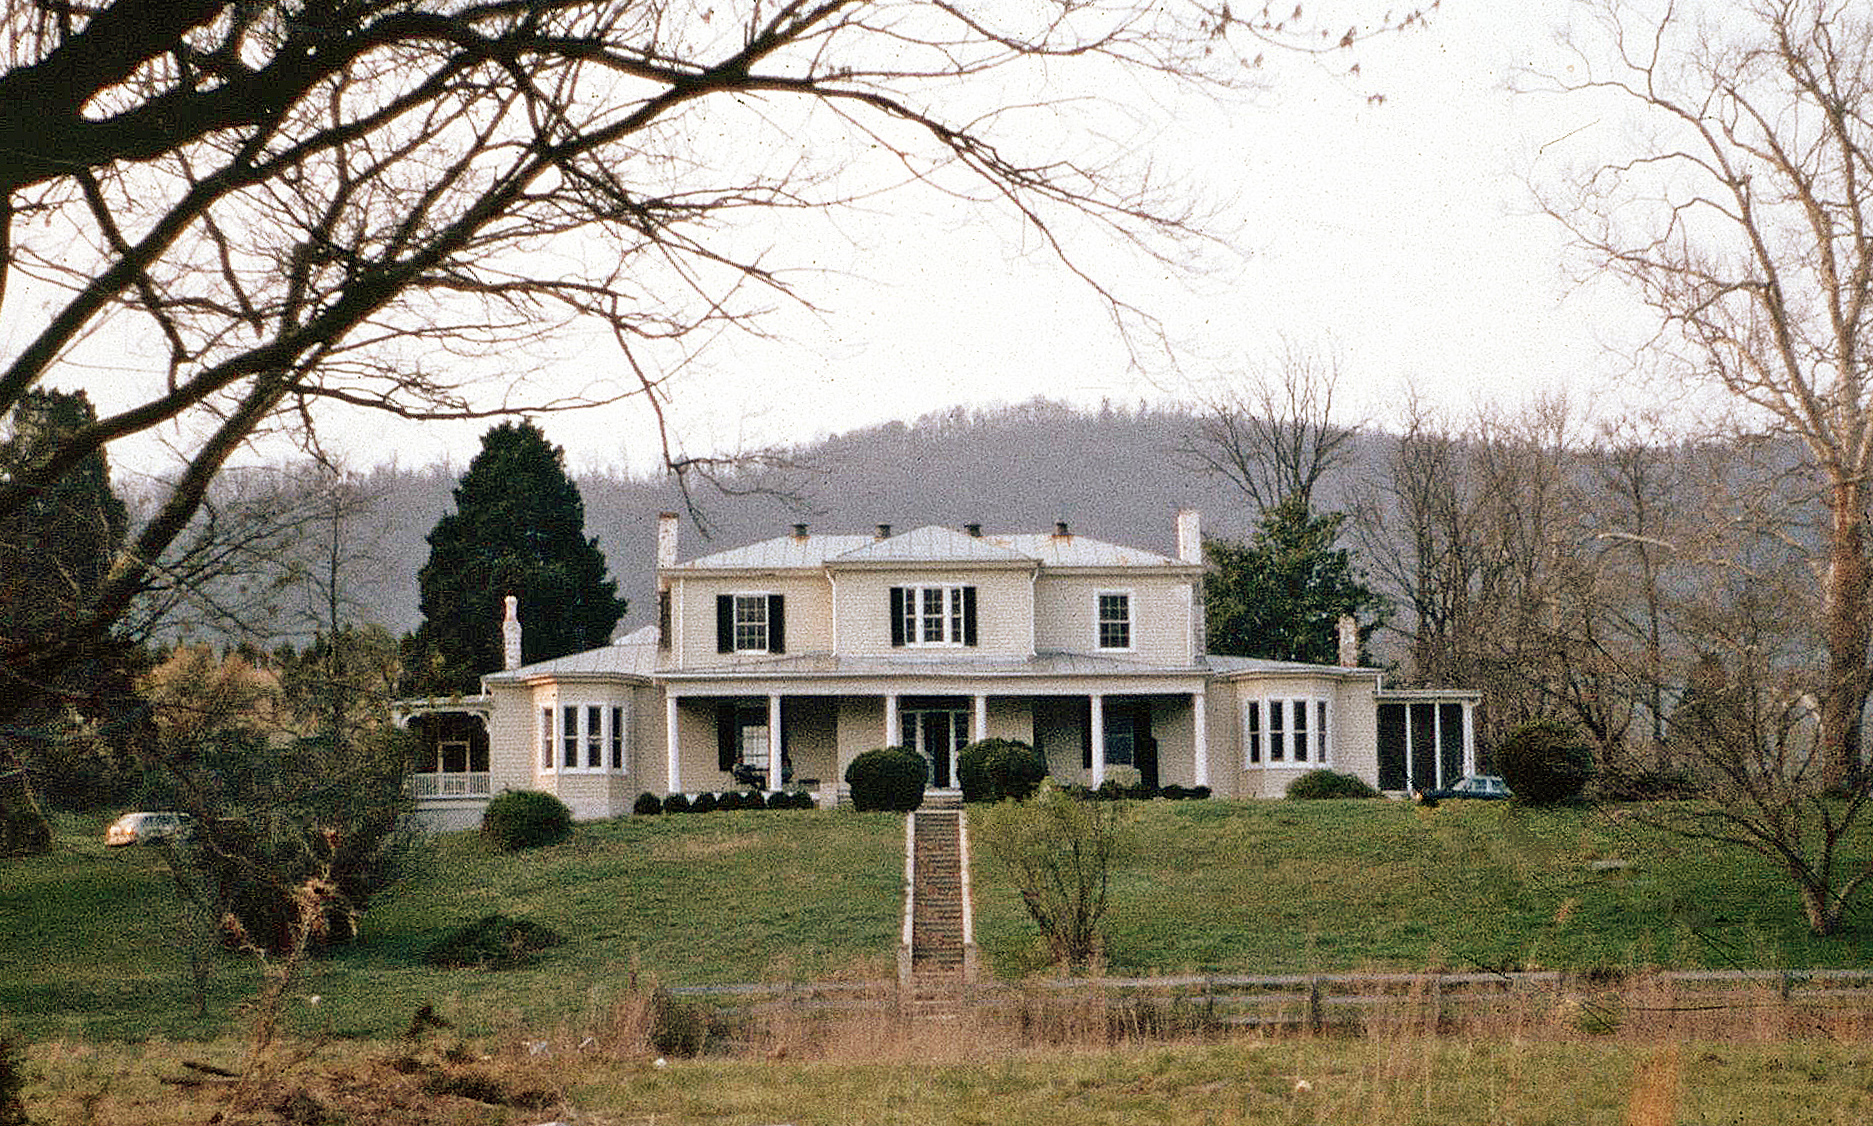 081-0295_Virginia_Manor_1987_exterior_front_elevation_VLR_Online